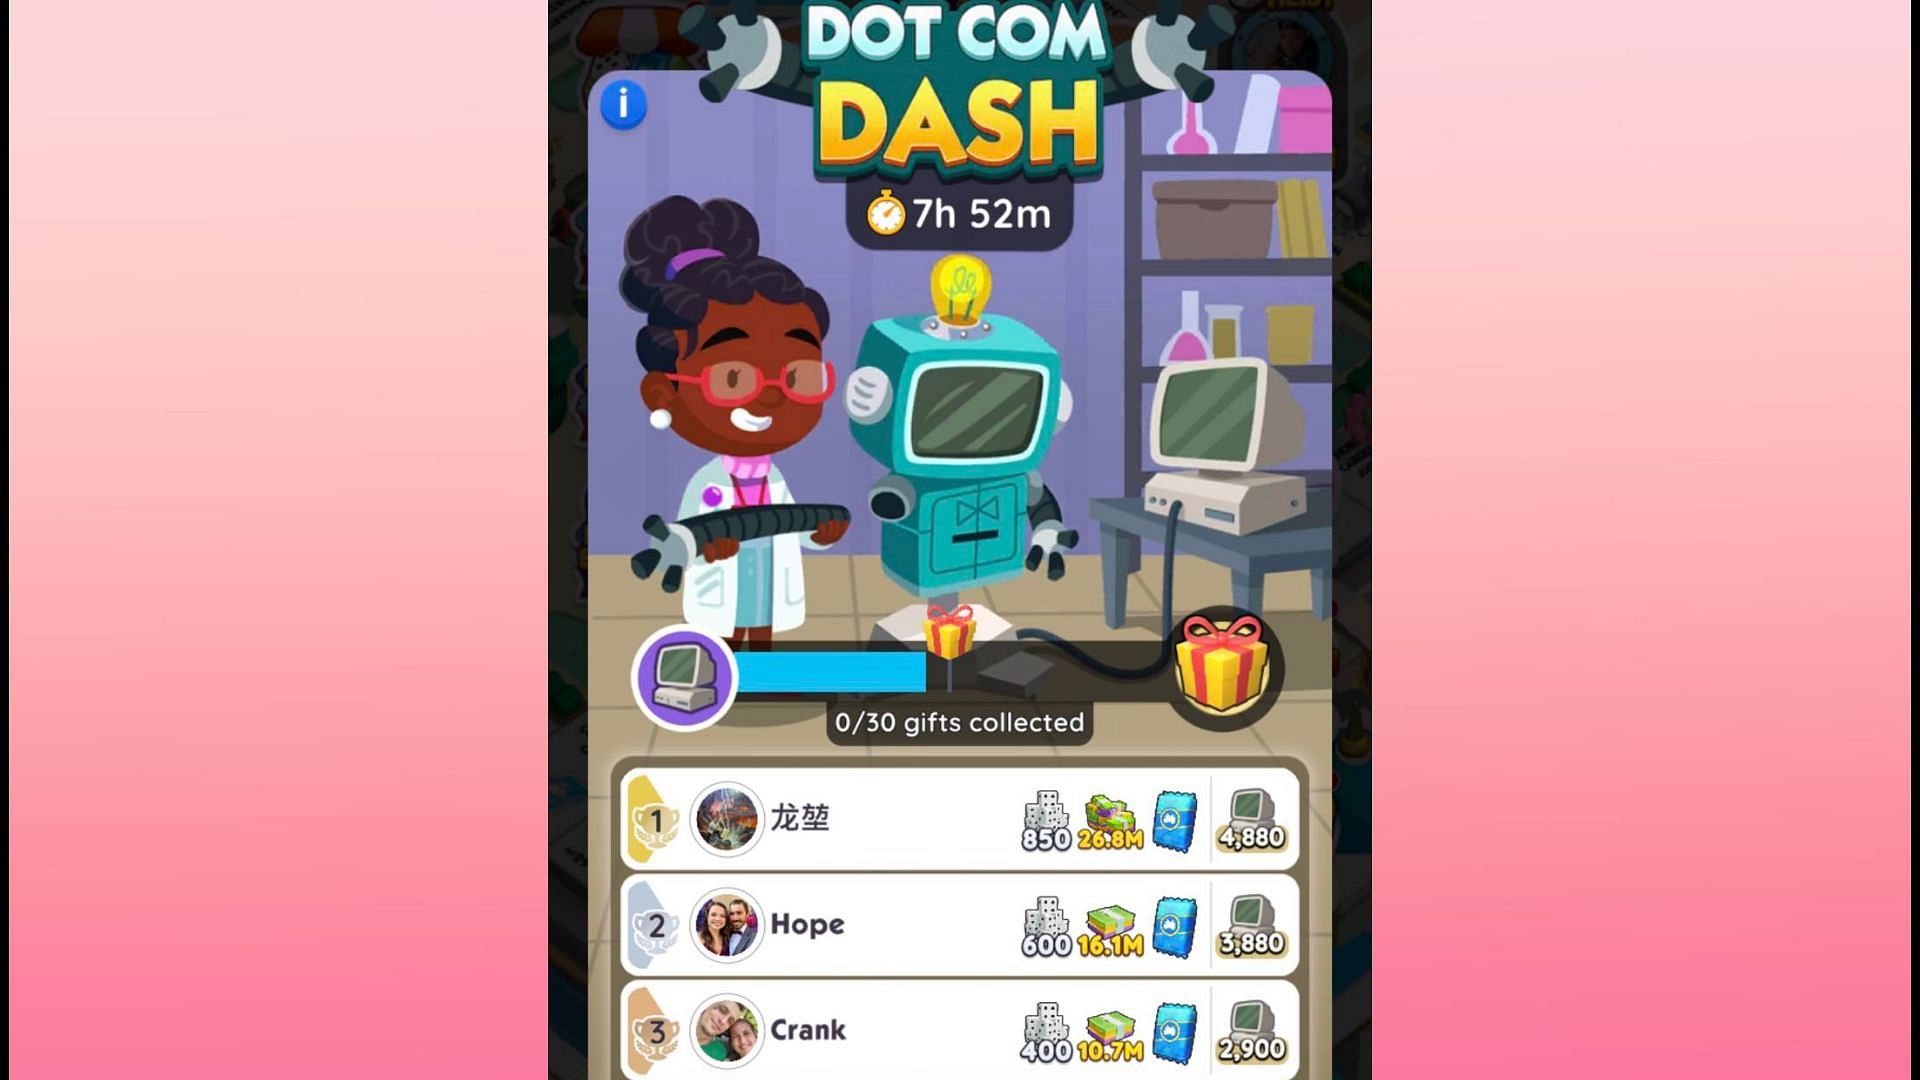 Monopoly Go Dot Com Dash tournament leaderboard rewards are offered in plenty (Image via Scopely)